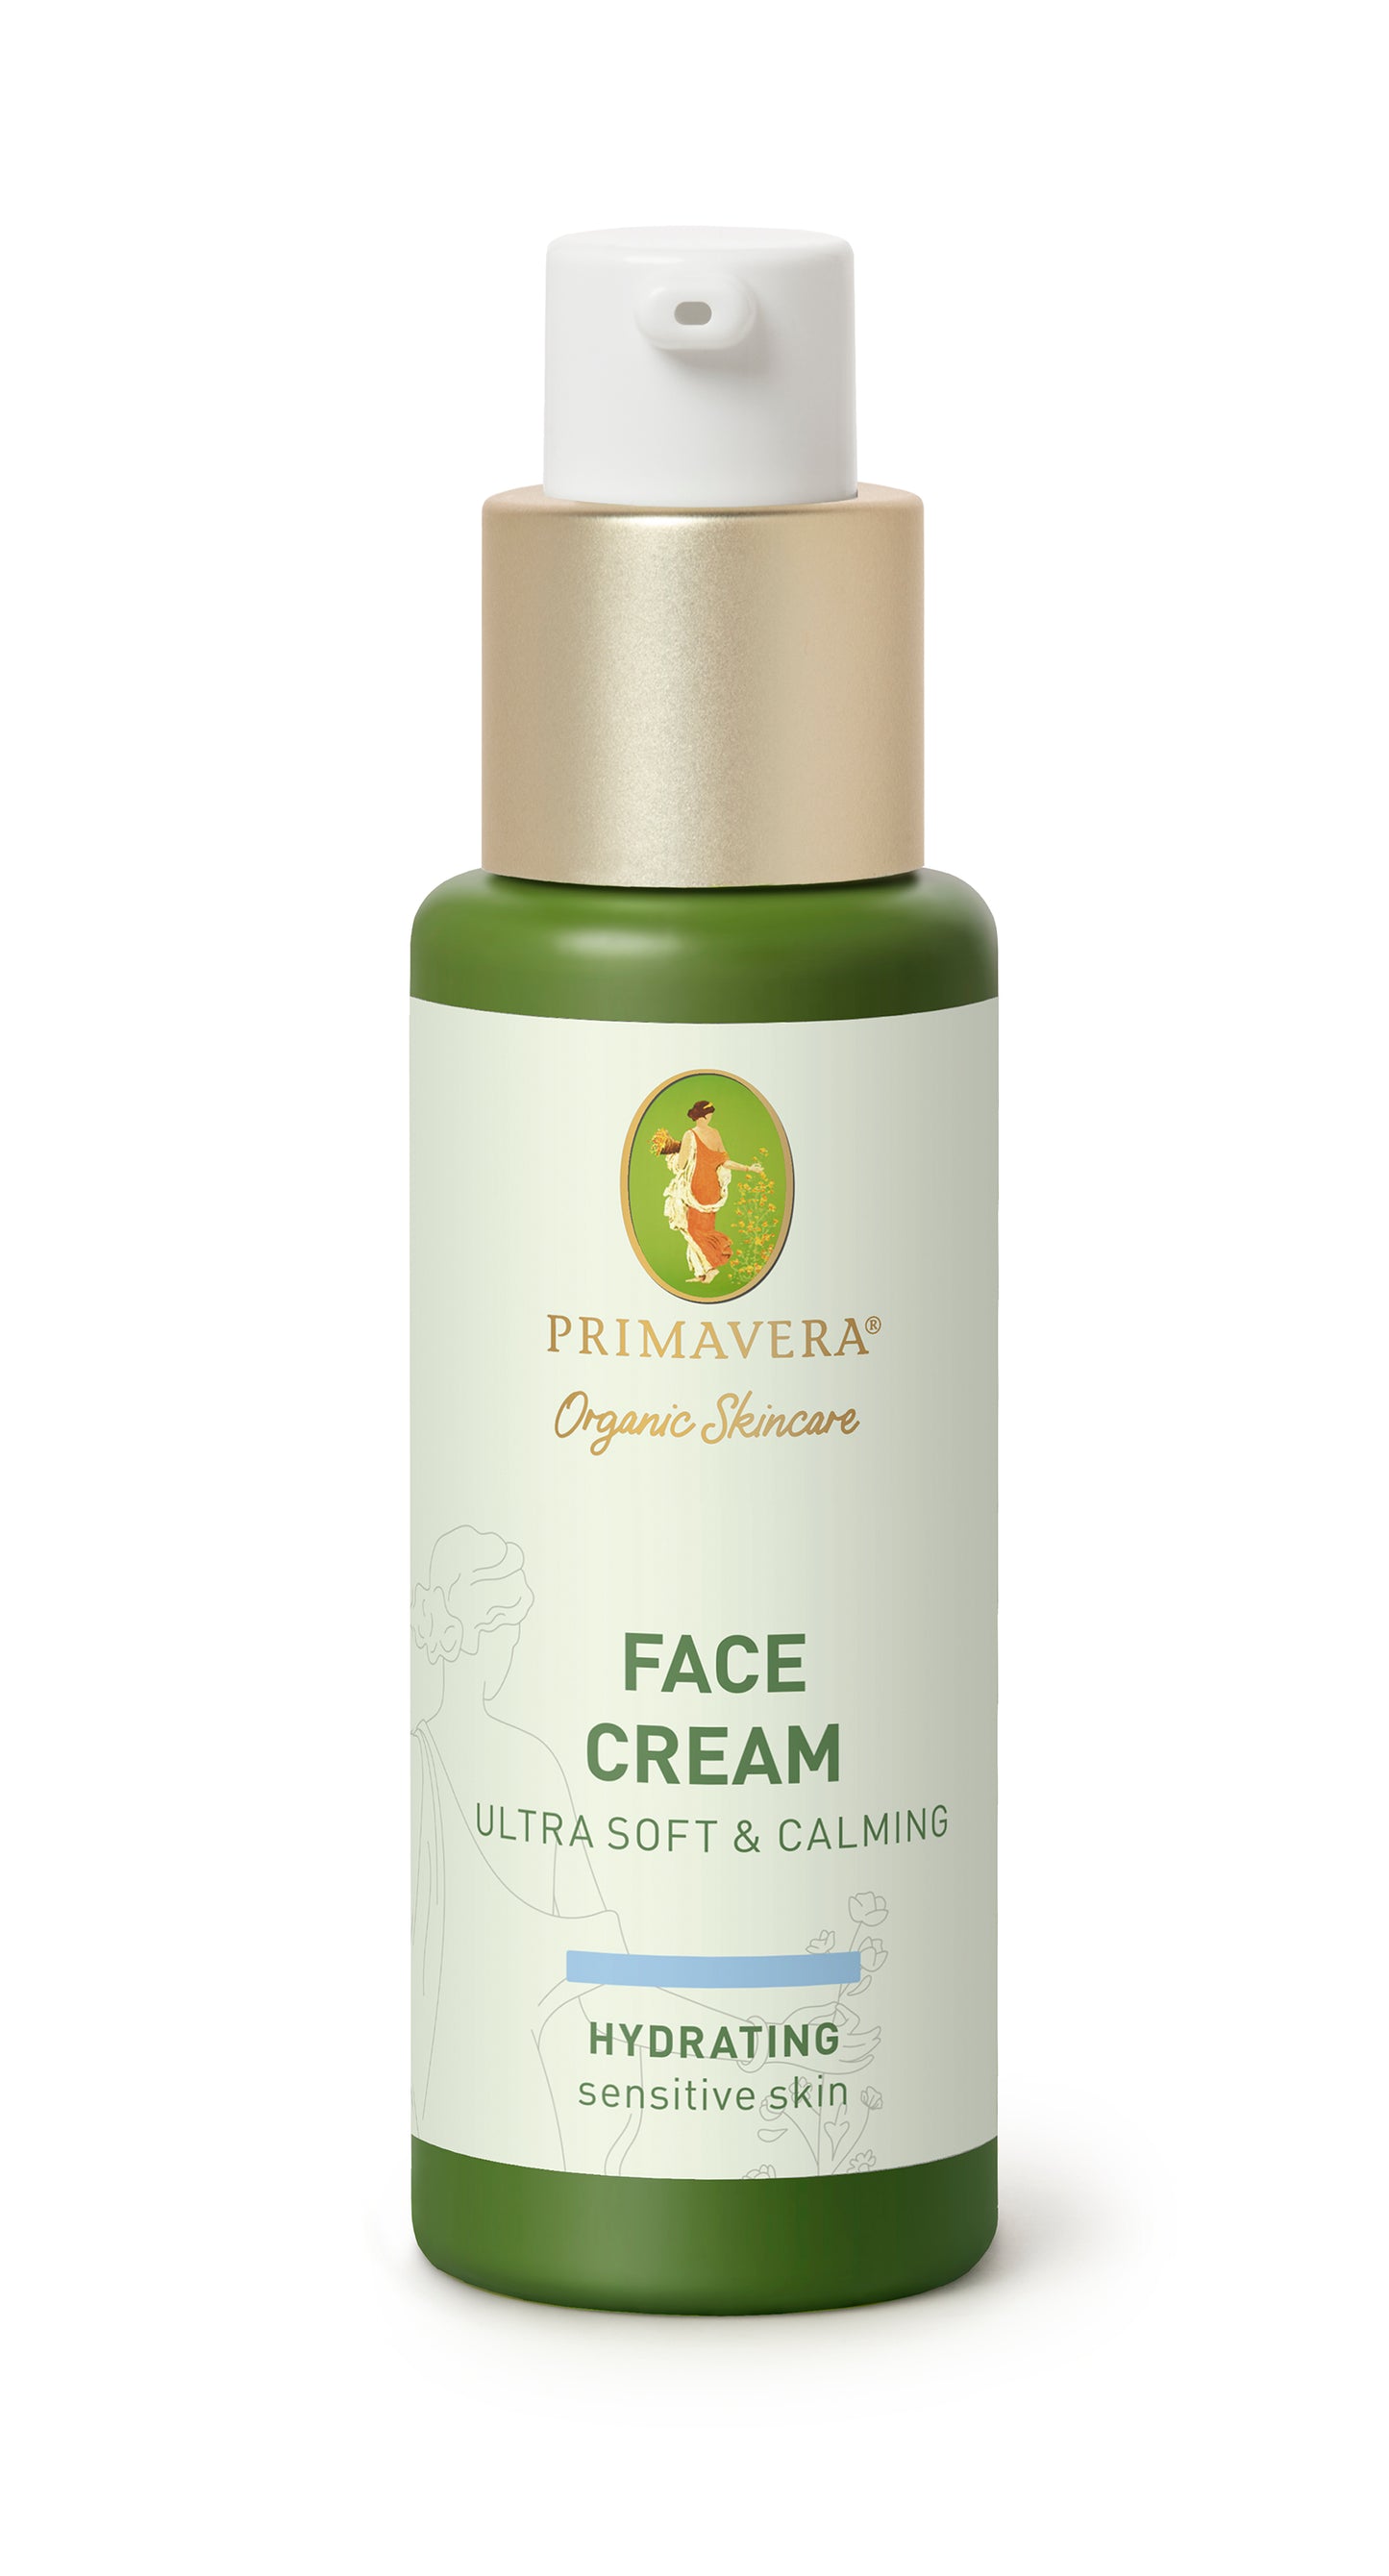 Primavera - Hydrating - Face Cream - Ultra soft & Calming 30 ml